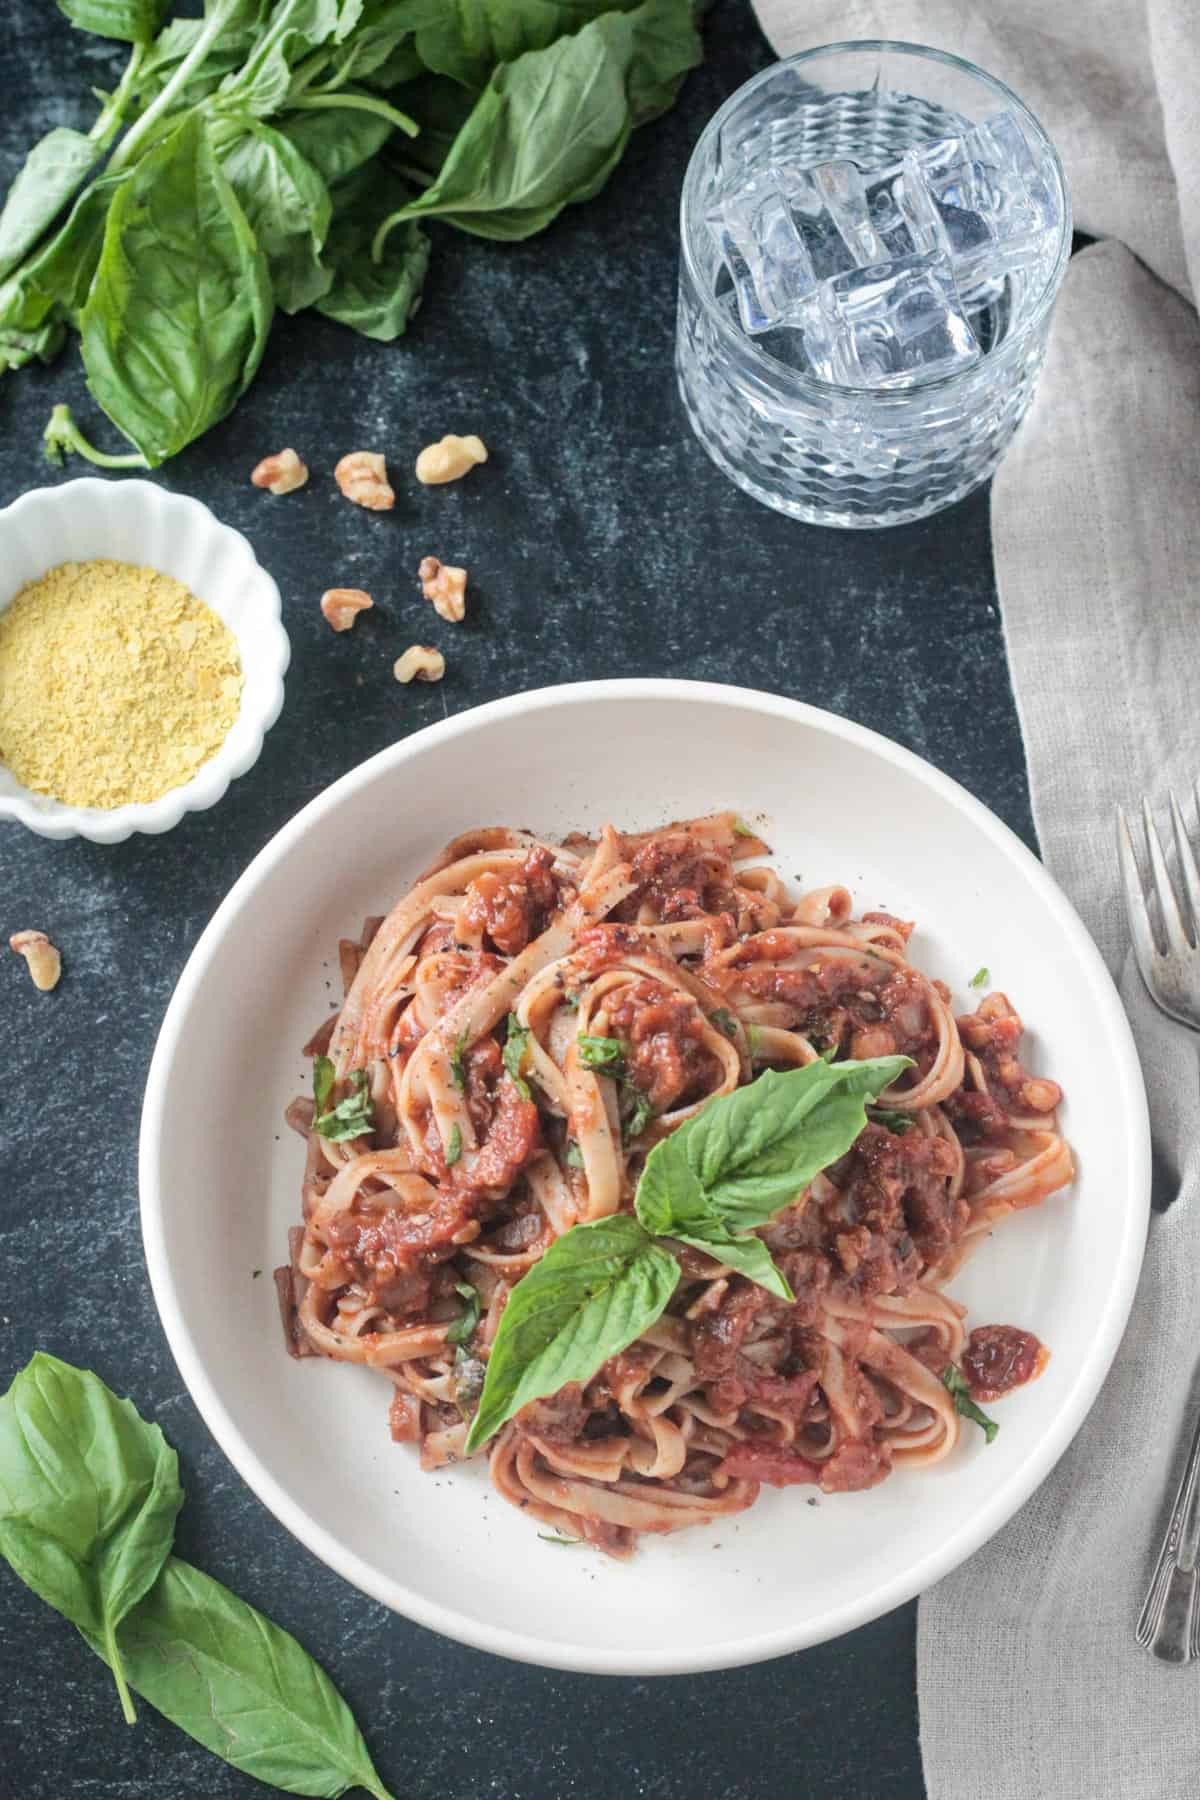 Fettuccine noodles with vegan bolognese garnished with fresh basil leaves.